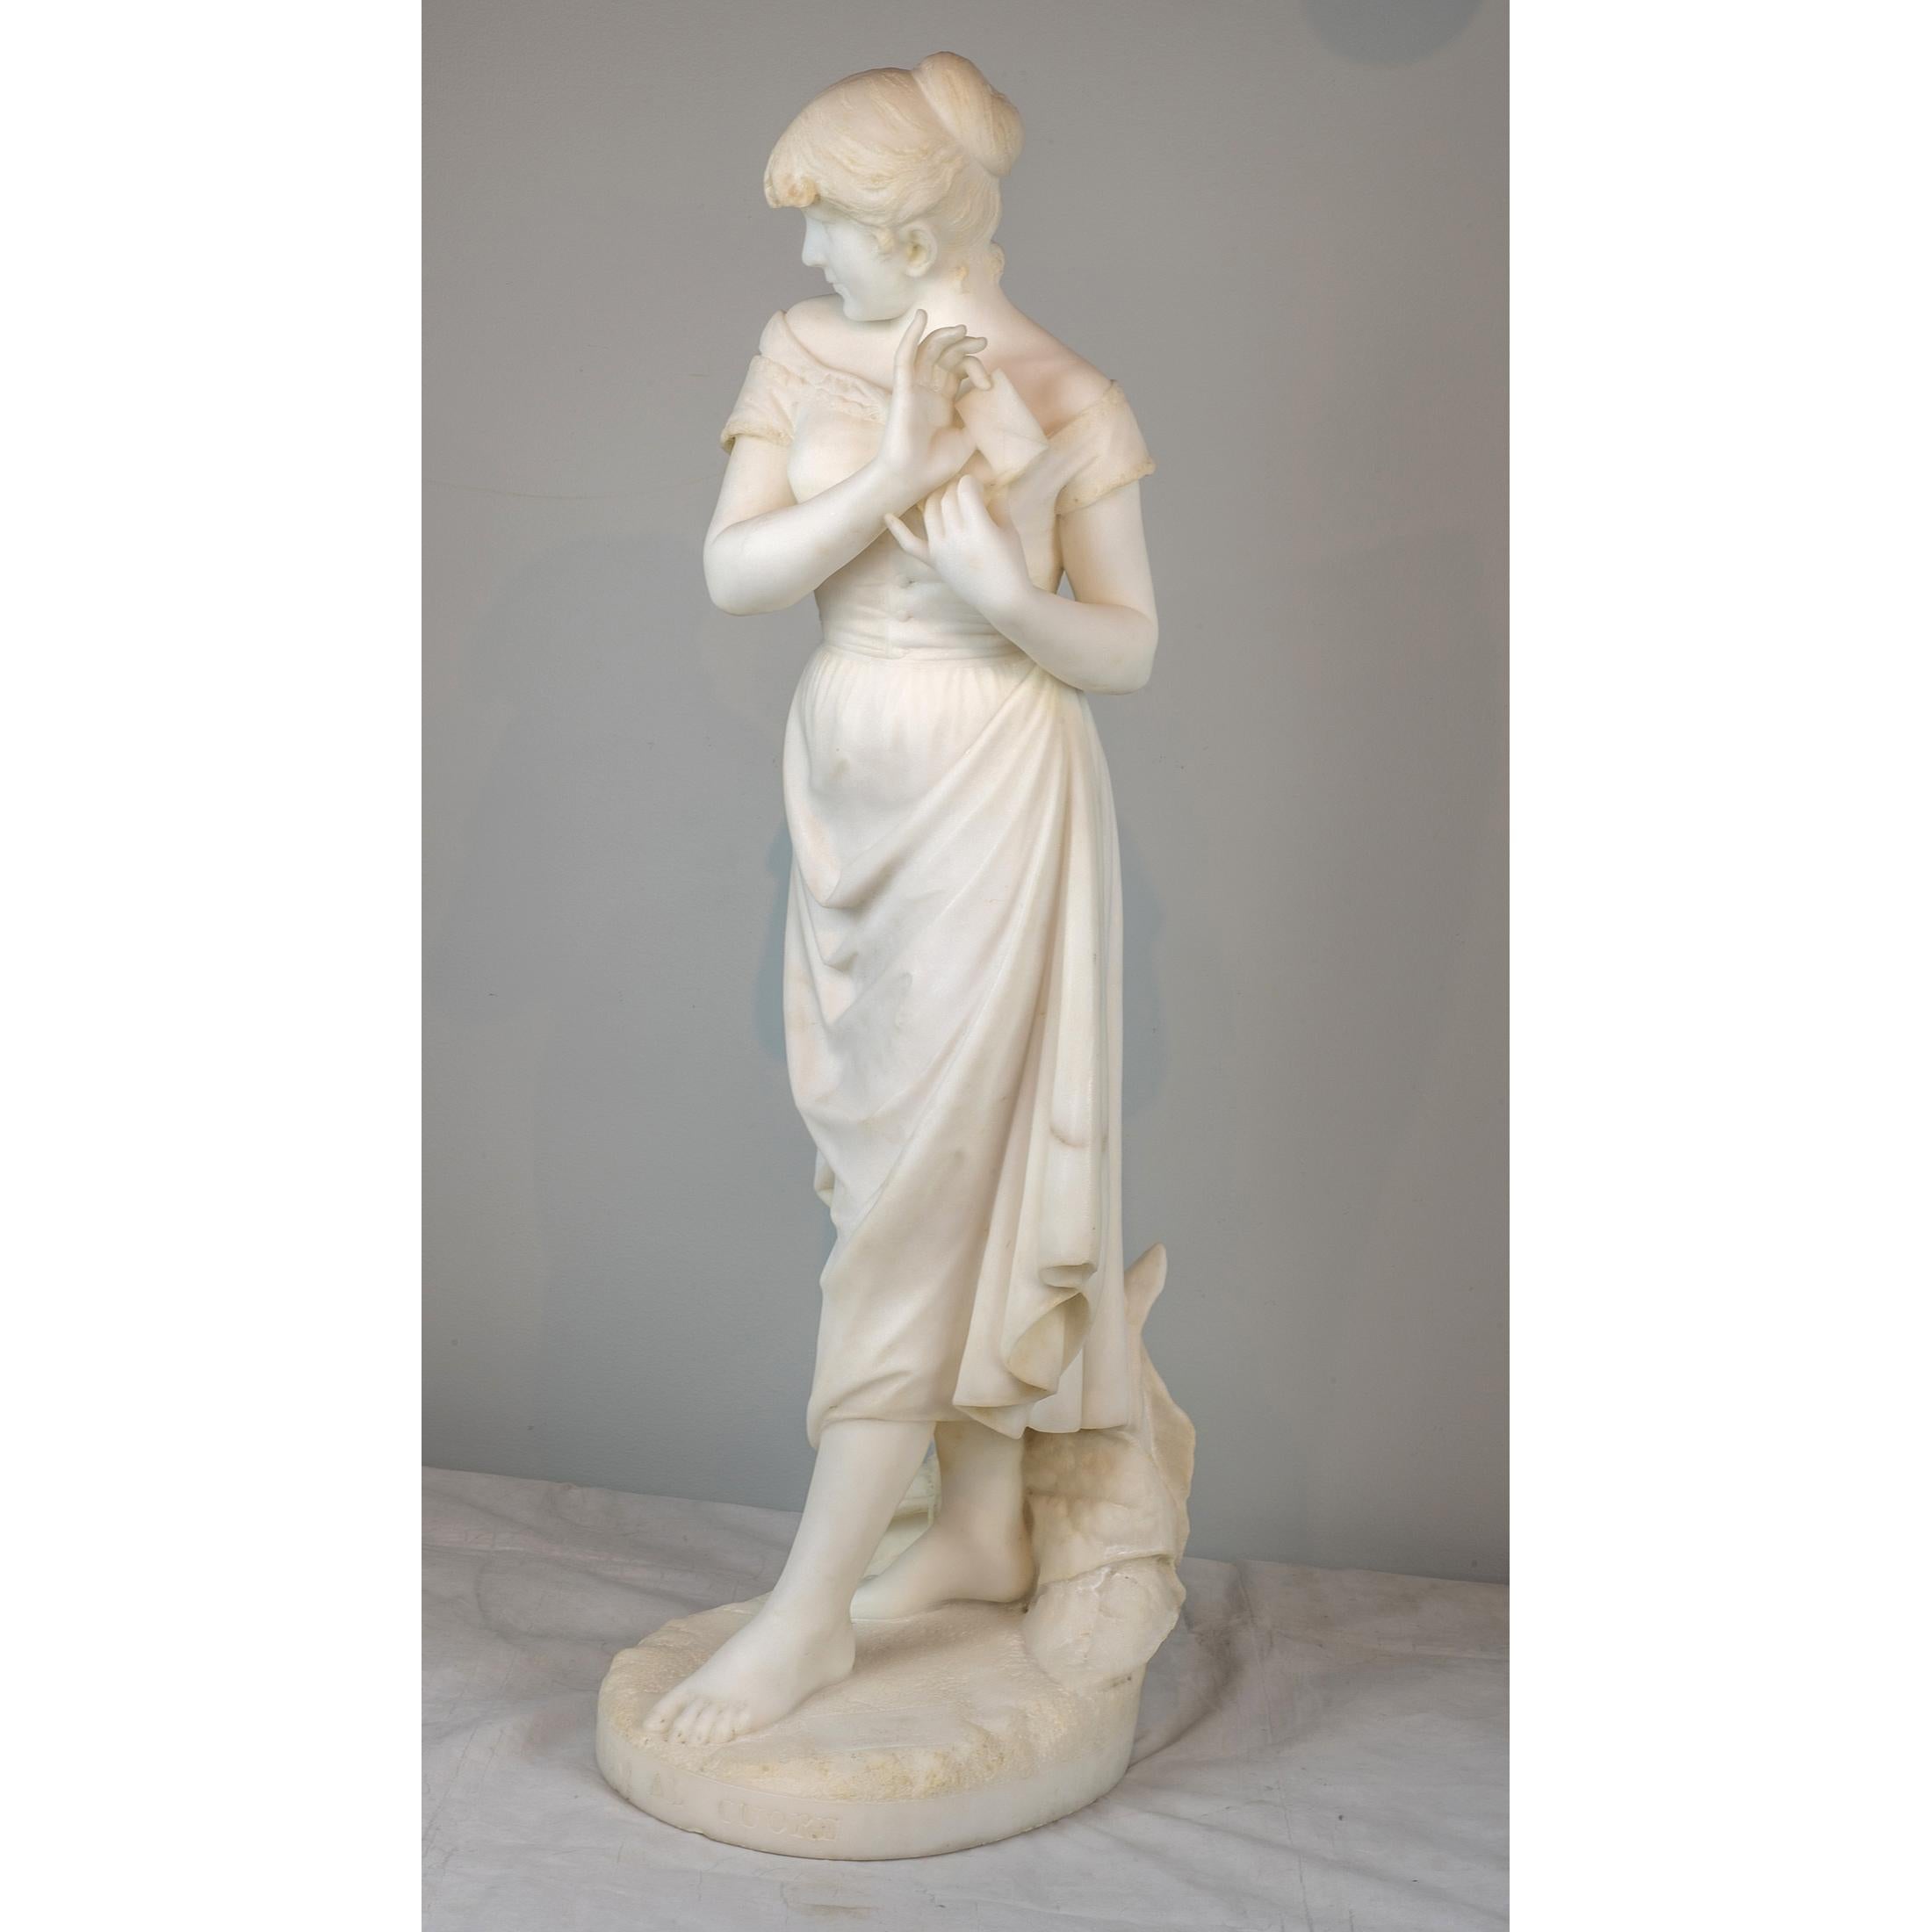 A fine quality white marble sculpture of a young maiden entitled “Segreto al cuore”. Signed Fratelli Lapini- Firenze on base.

Artist: Cesare Lapini (1848-1893)
Origin: Italian
Date: 19th century
Size: 29 1/4 in. x 8 in. x 11 in.